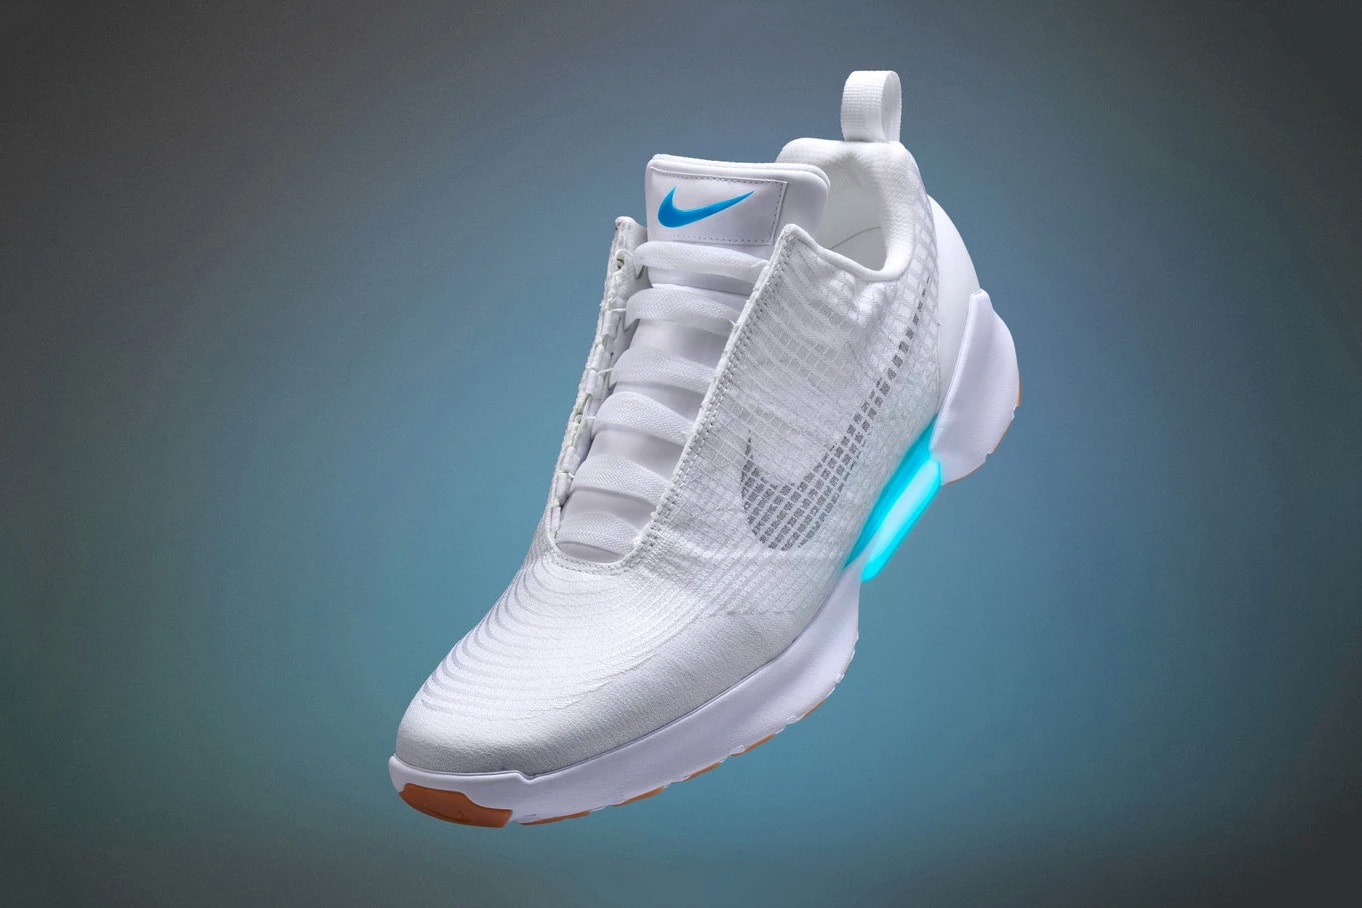 nike hyperadapt self lacing sneaker 2019 release basketball shoe general launch